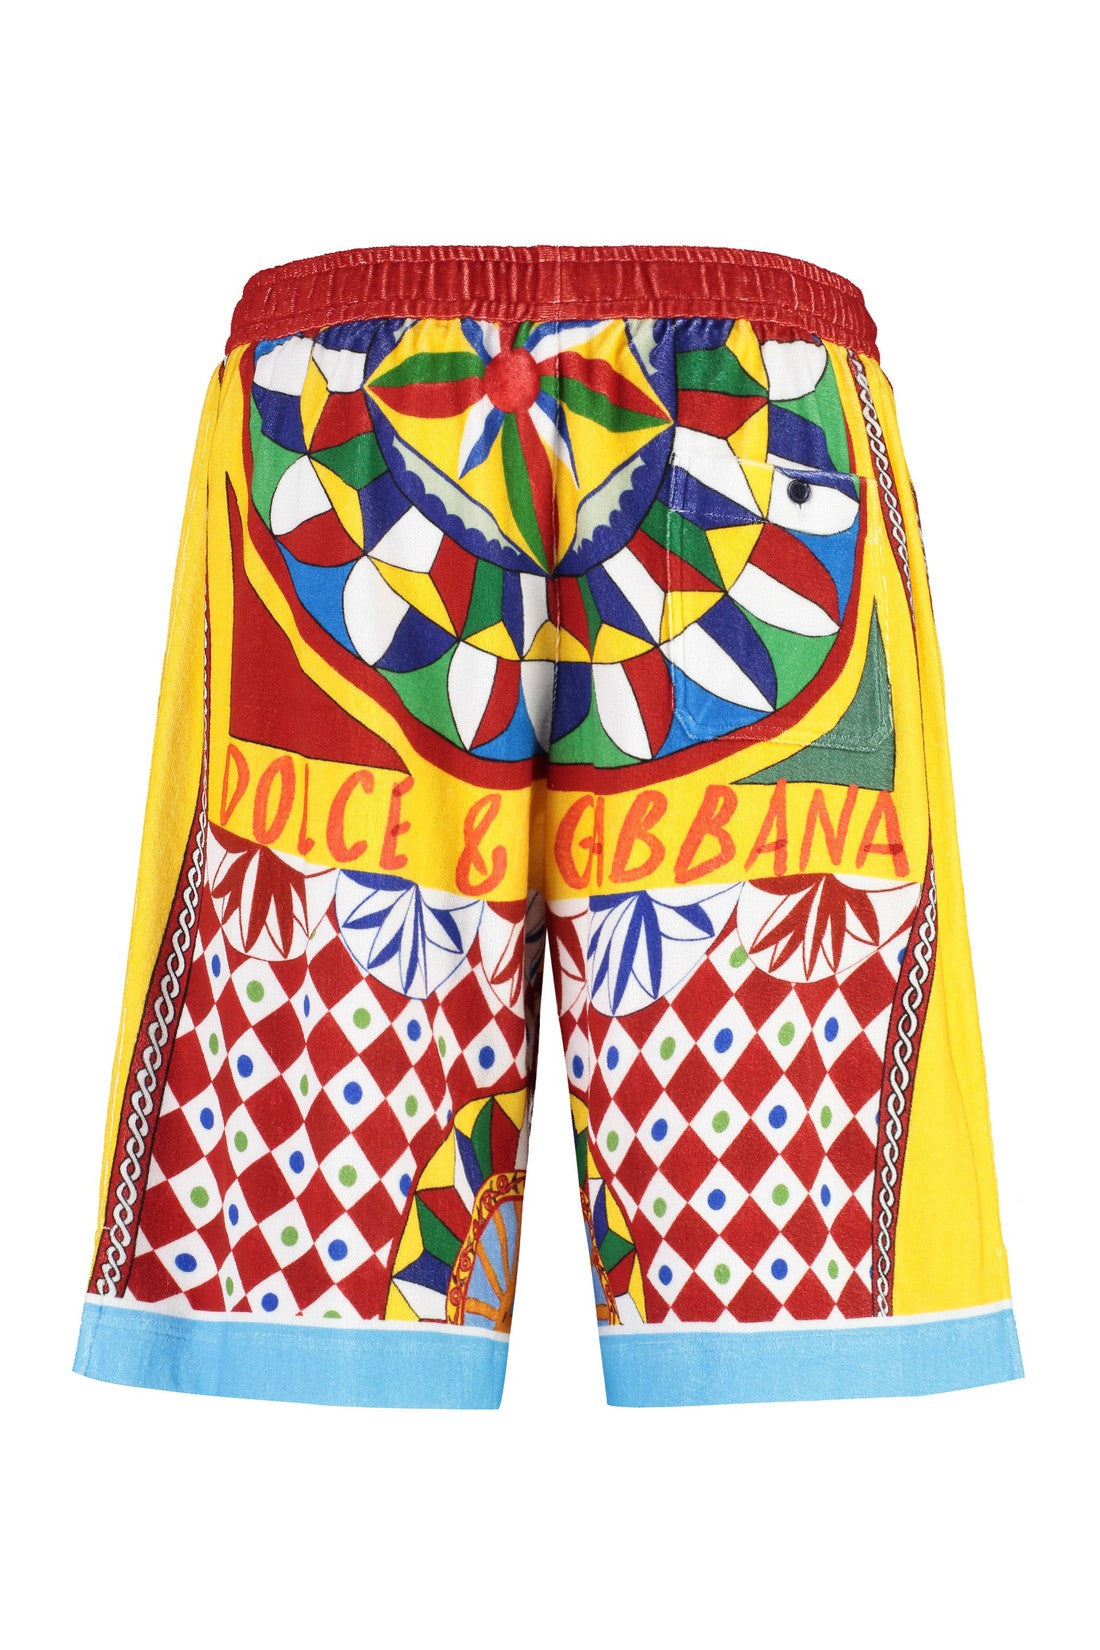 Dolce & Gabbana-OUTLET-SALE-Printed cotton shorts-ARCHIVIST